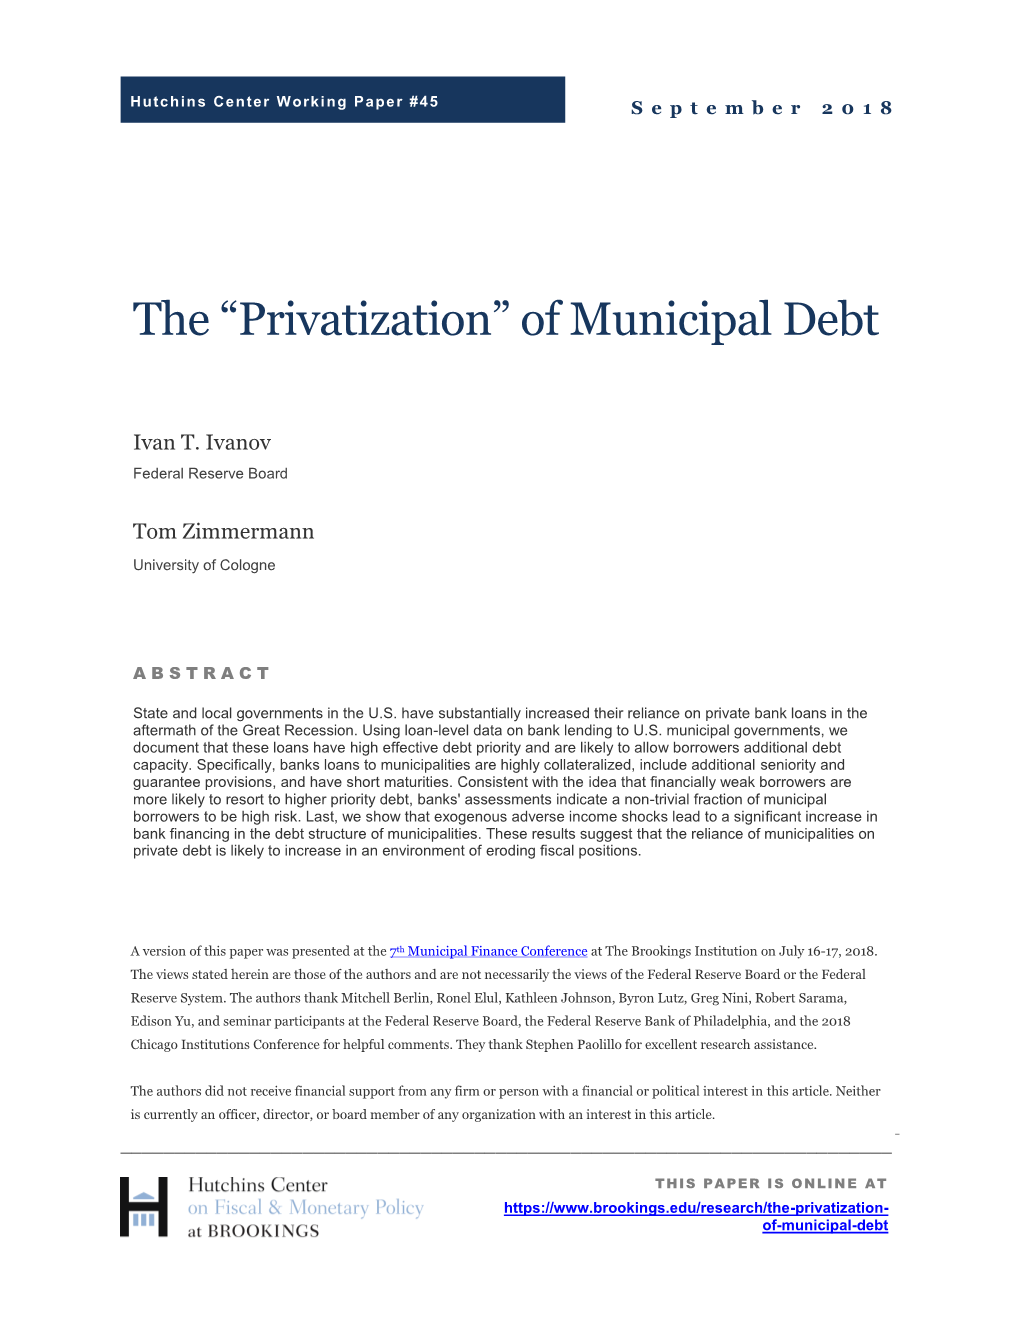 The “Privatization” of Municipal Debt